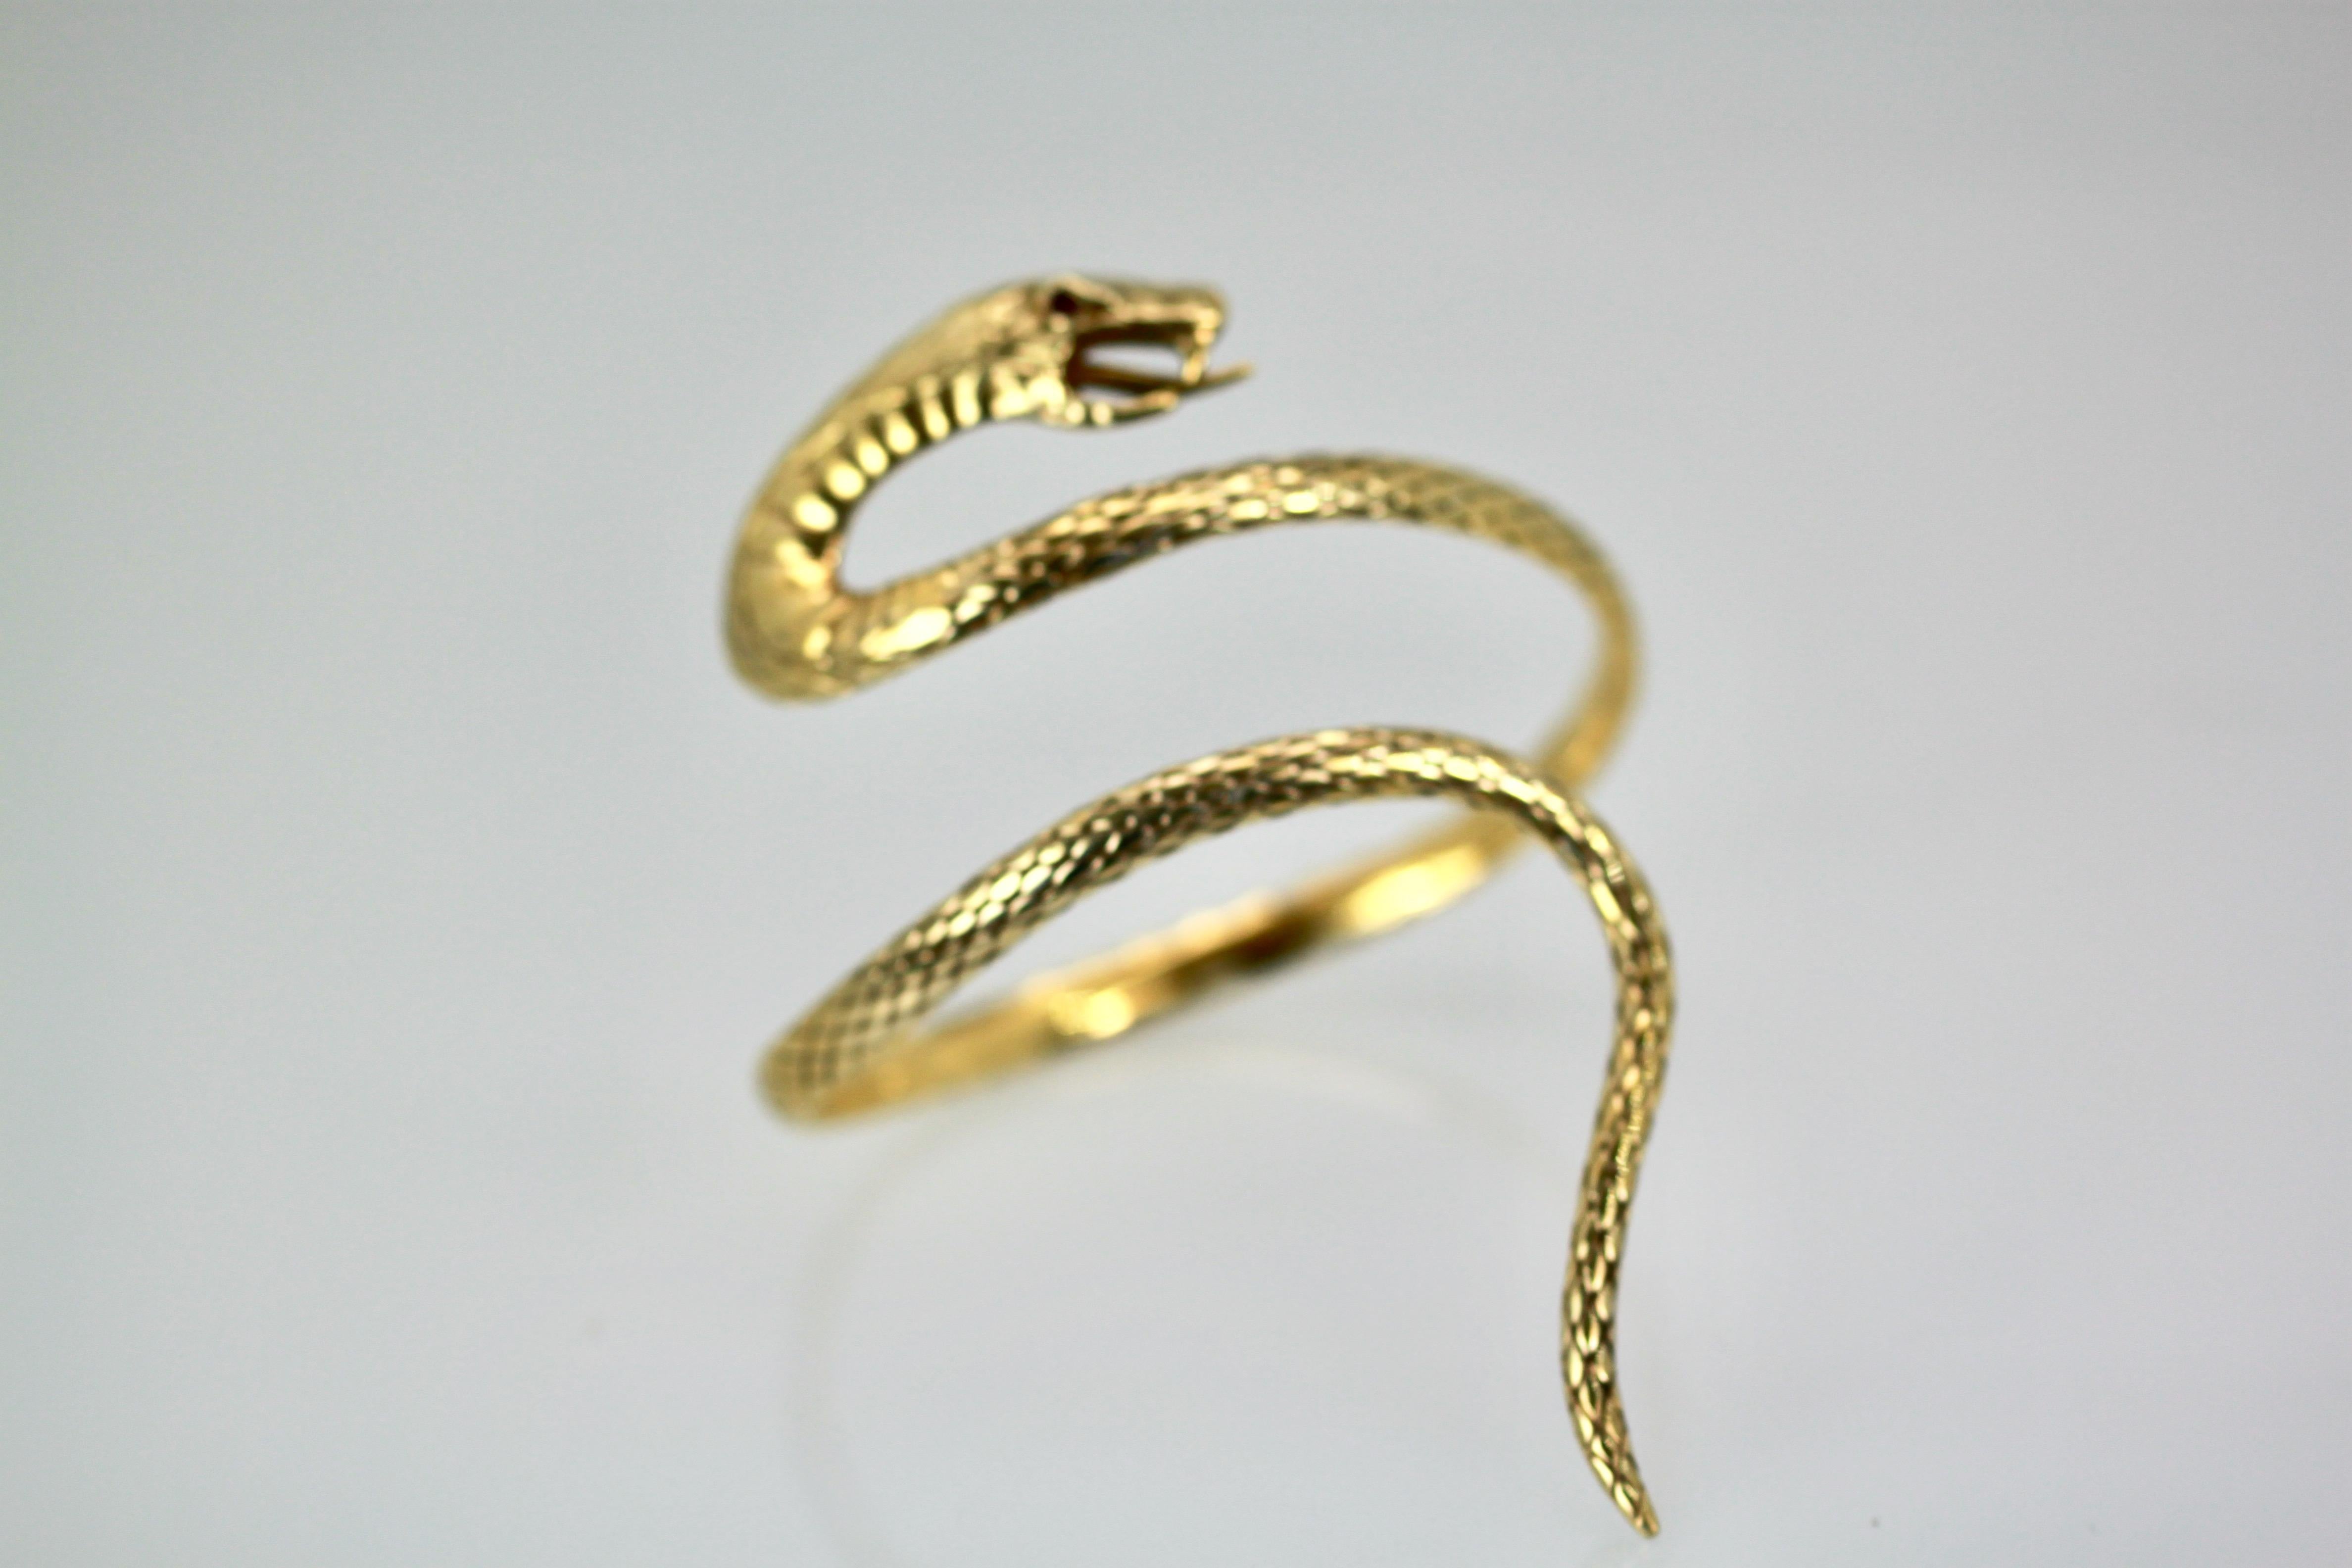 Round Cut 14k Yellow Gold Etched Snake Bracelet Attrib. Stephen Webster For Sale